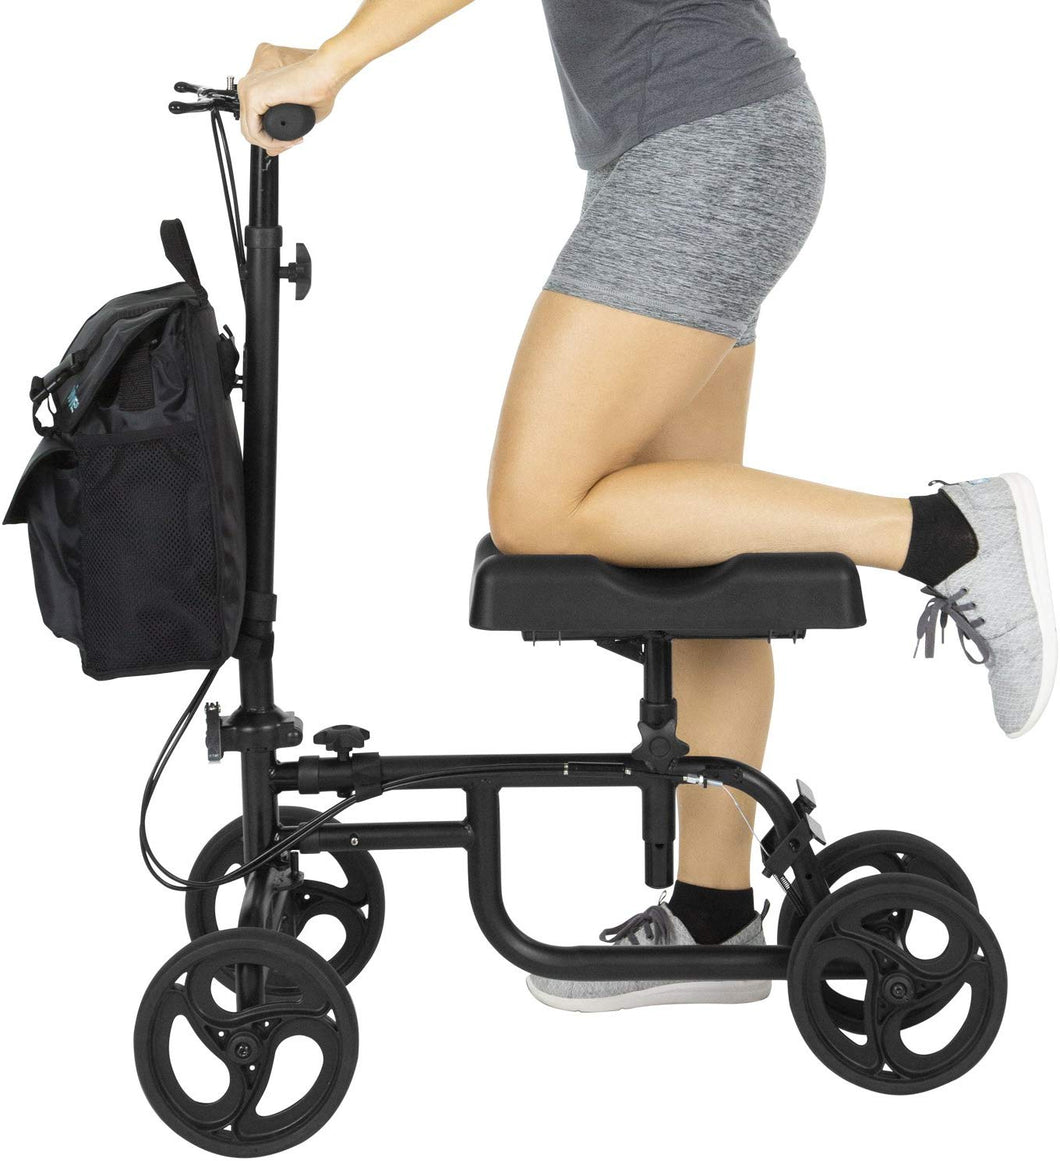 Knee Walker - Steerable Scooter For Broken Leg, Foot, Ankle Injuries - Kneeling Quad Roller Cart - EK CHIC HOME